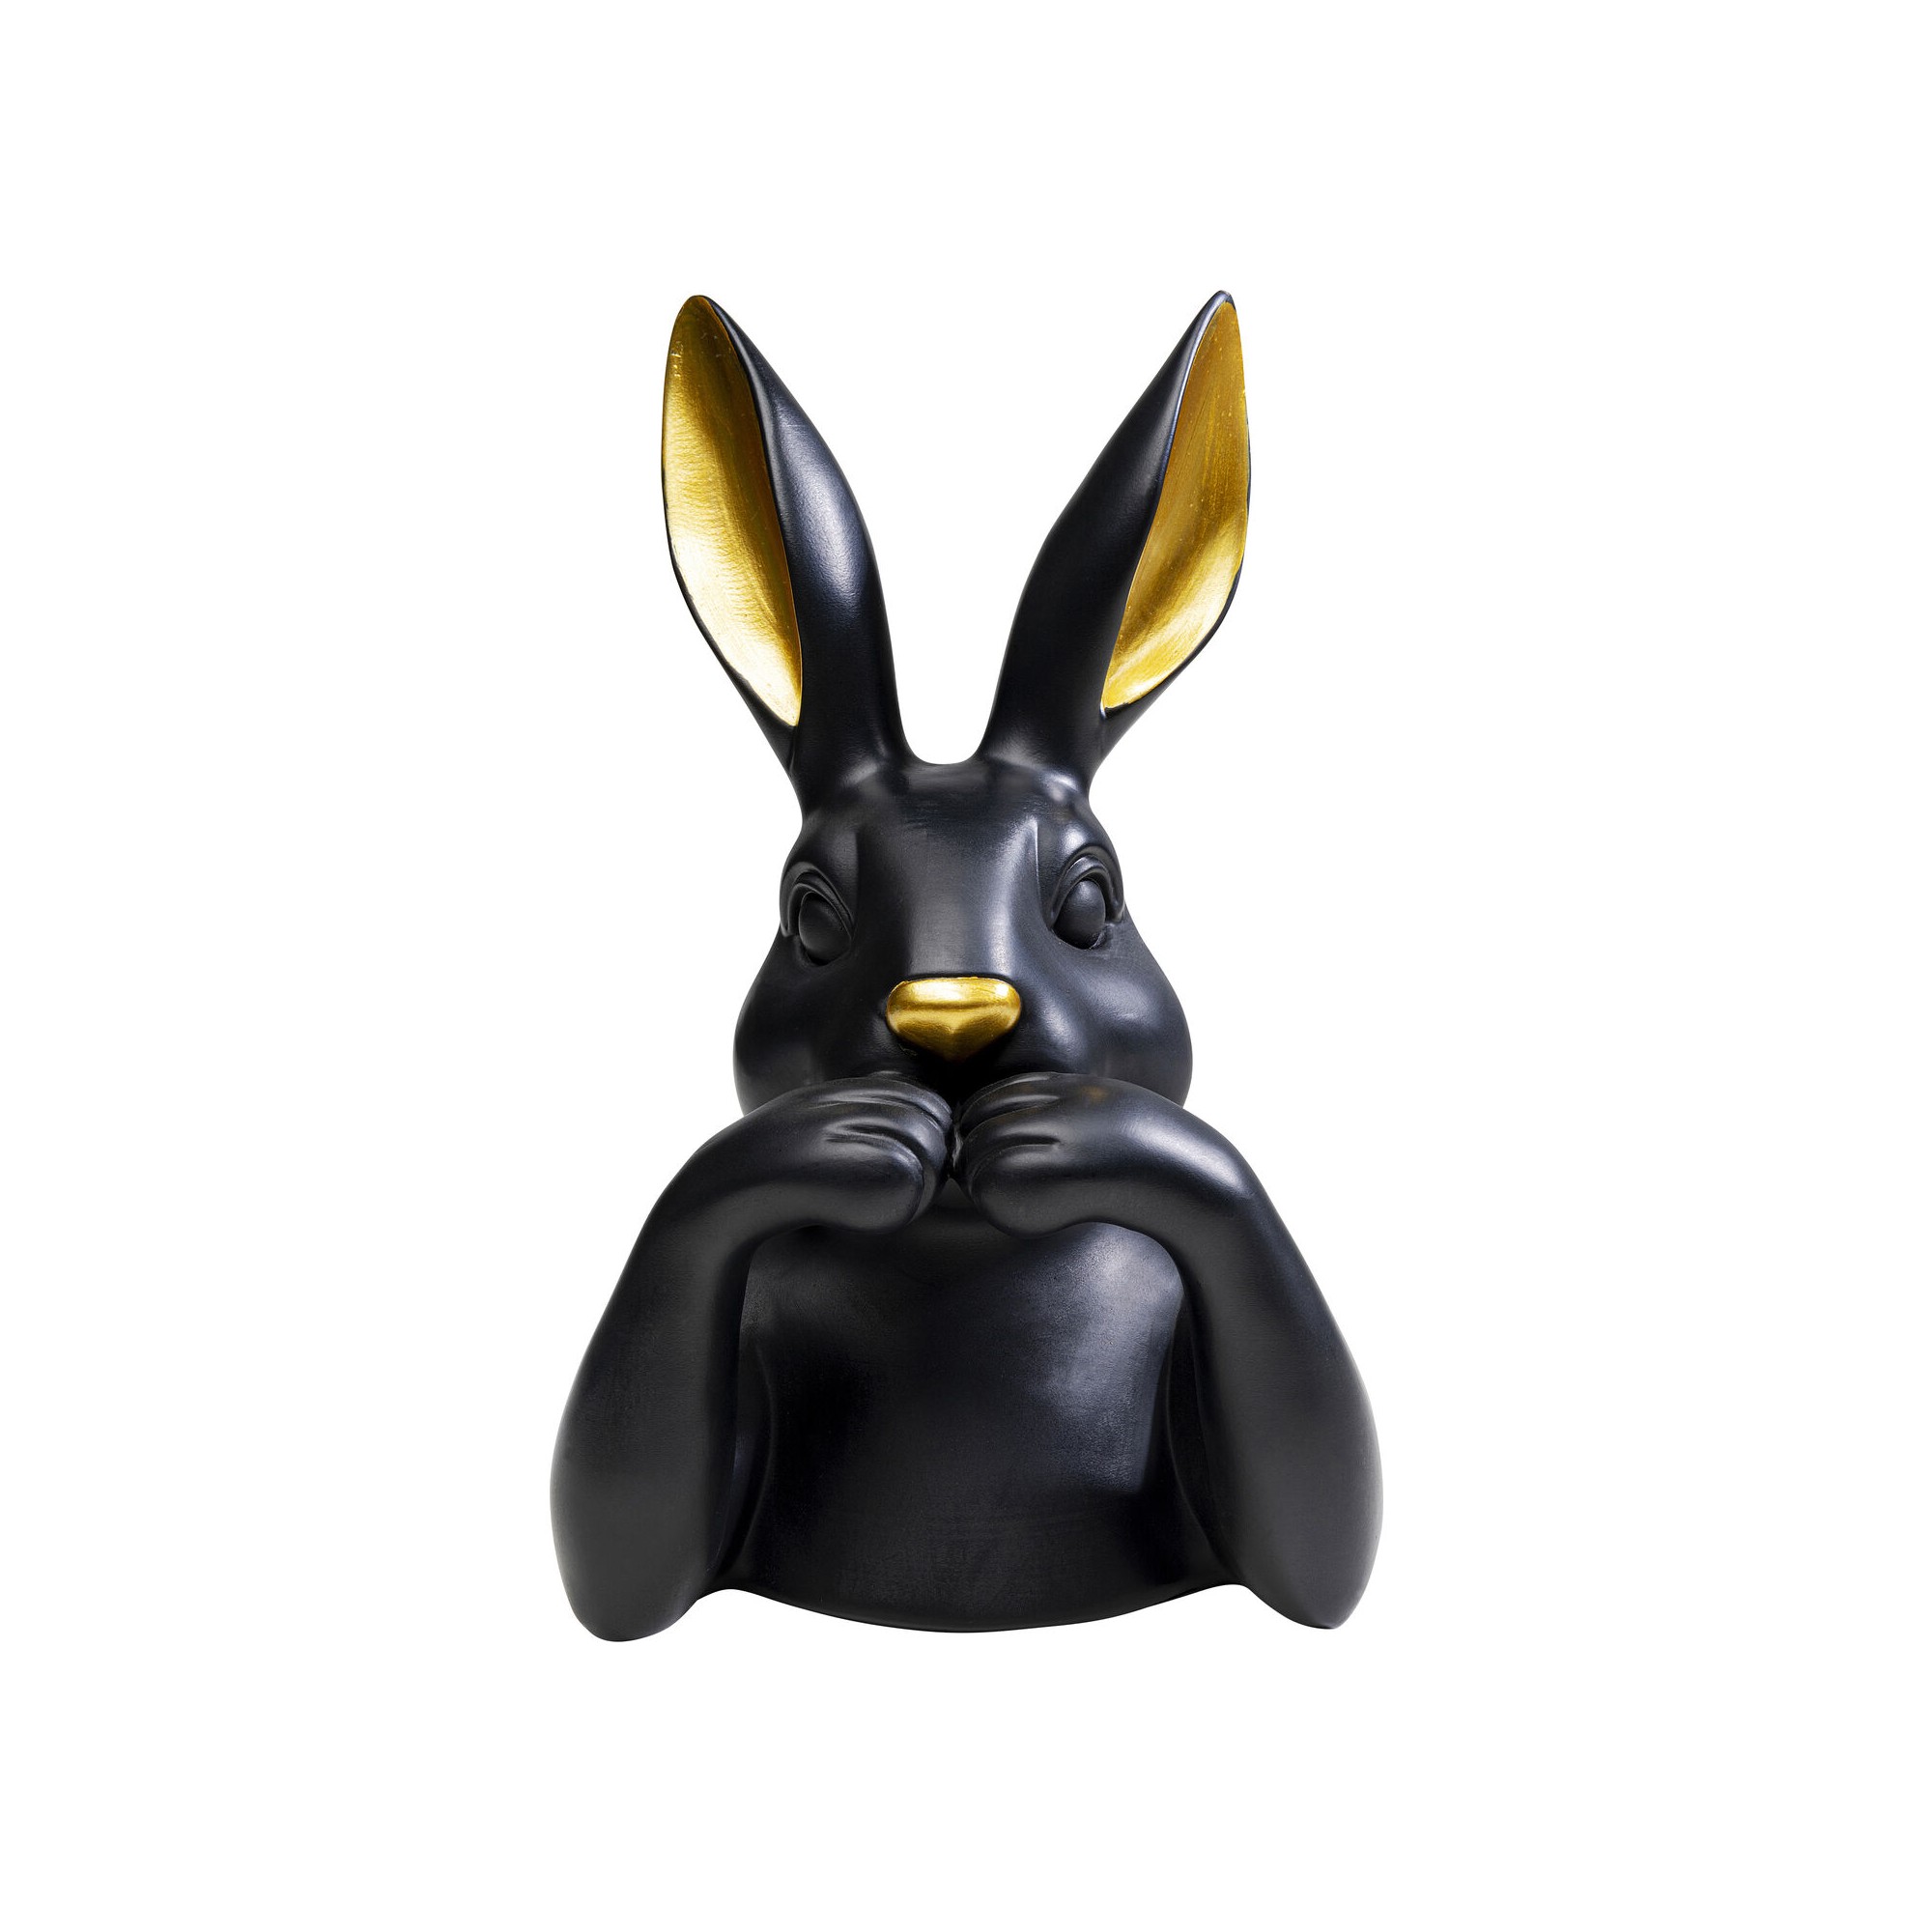 Decoratie buste konijn zwart 31cm Kare Design